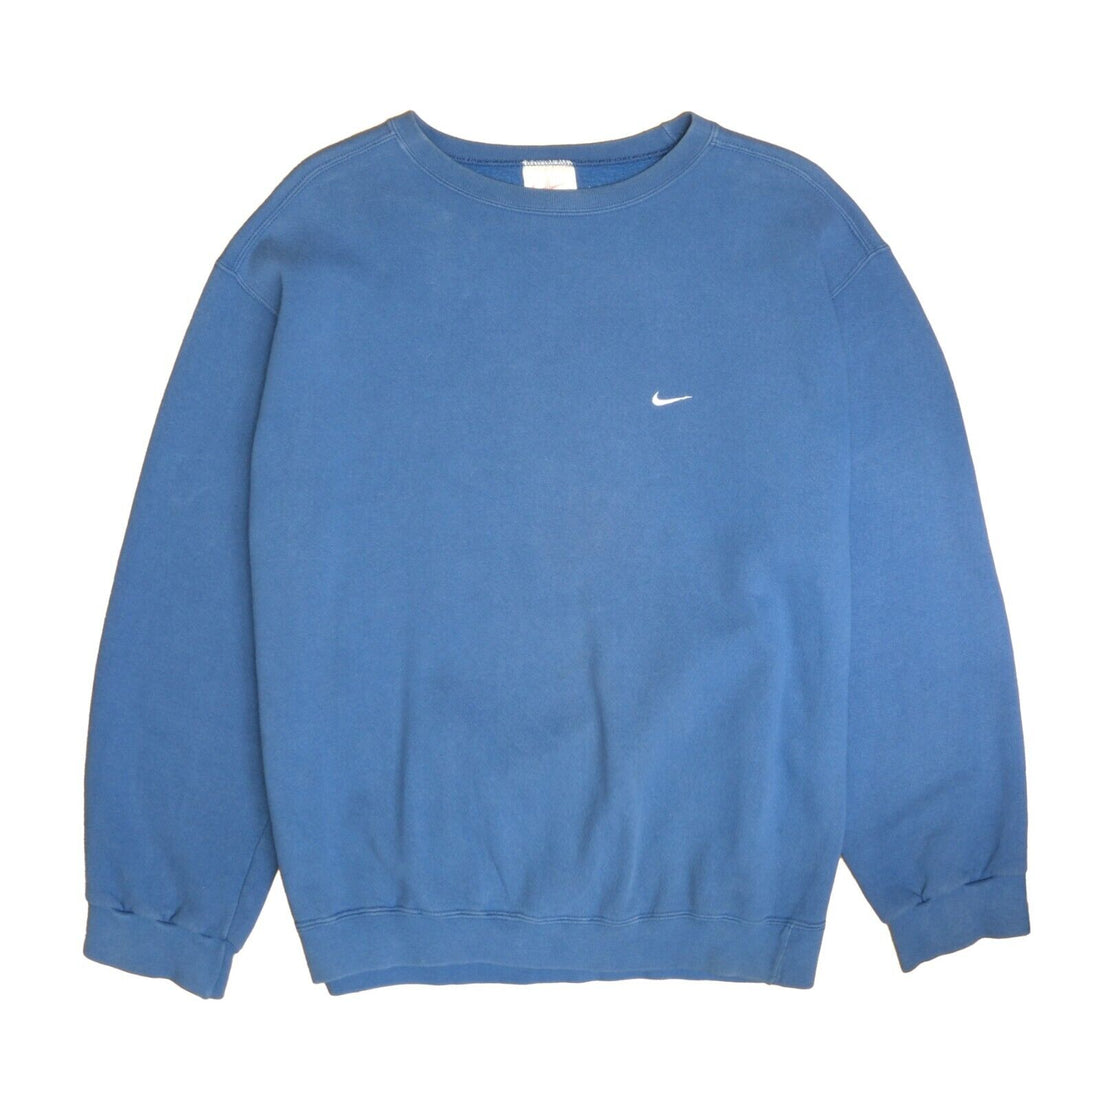 Vintage Nike Sweatshirt Crewneck Size Large Blue Embroidered Swoosh 90s